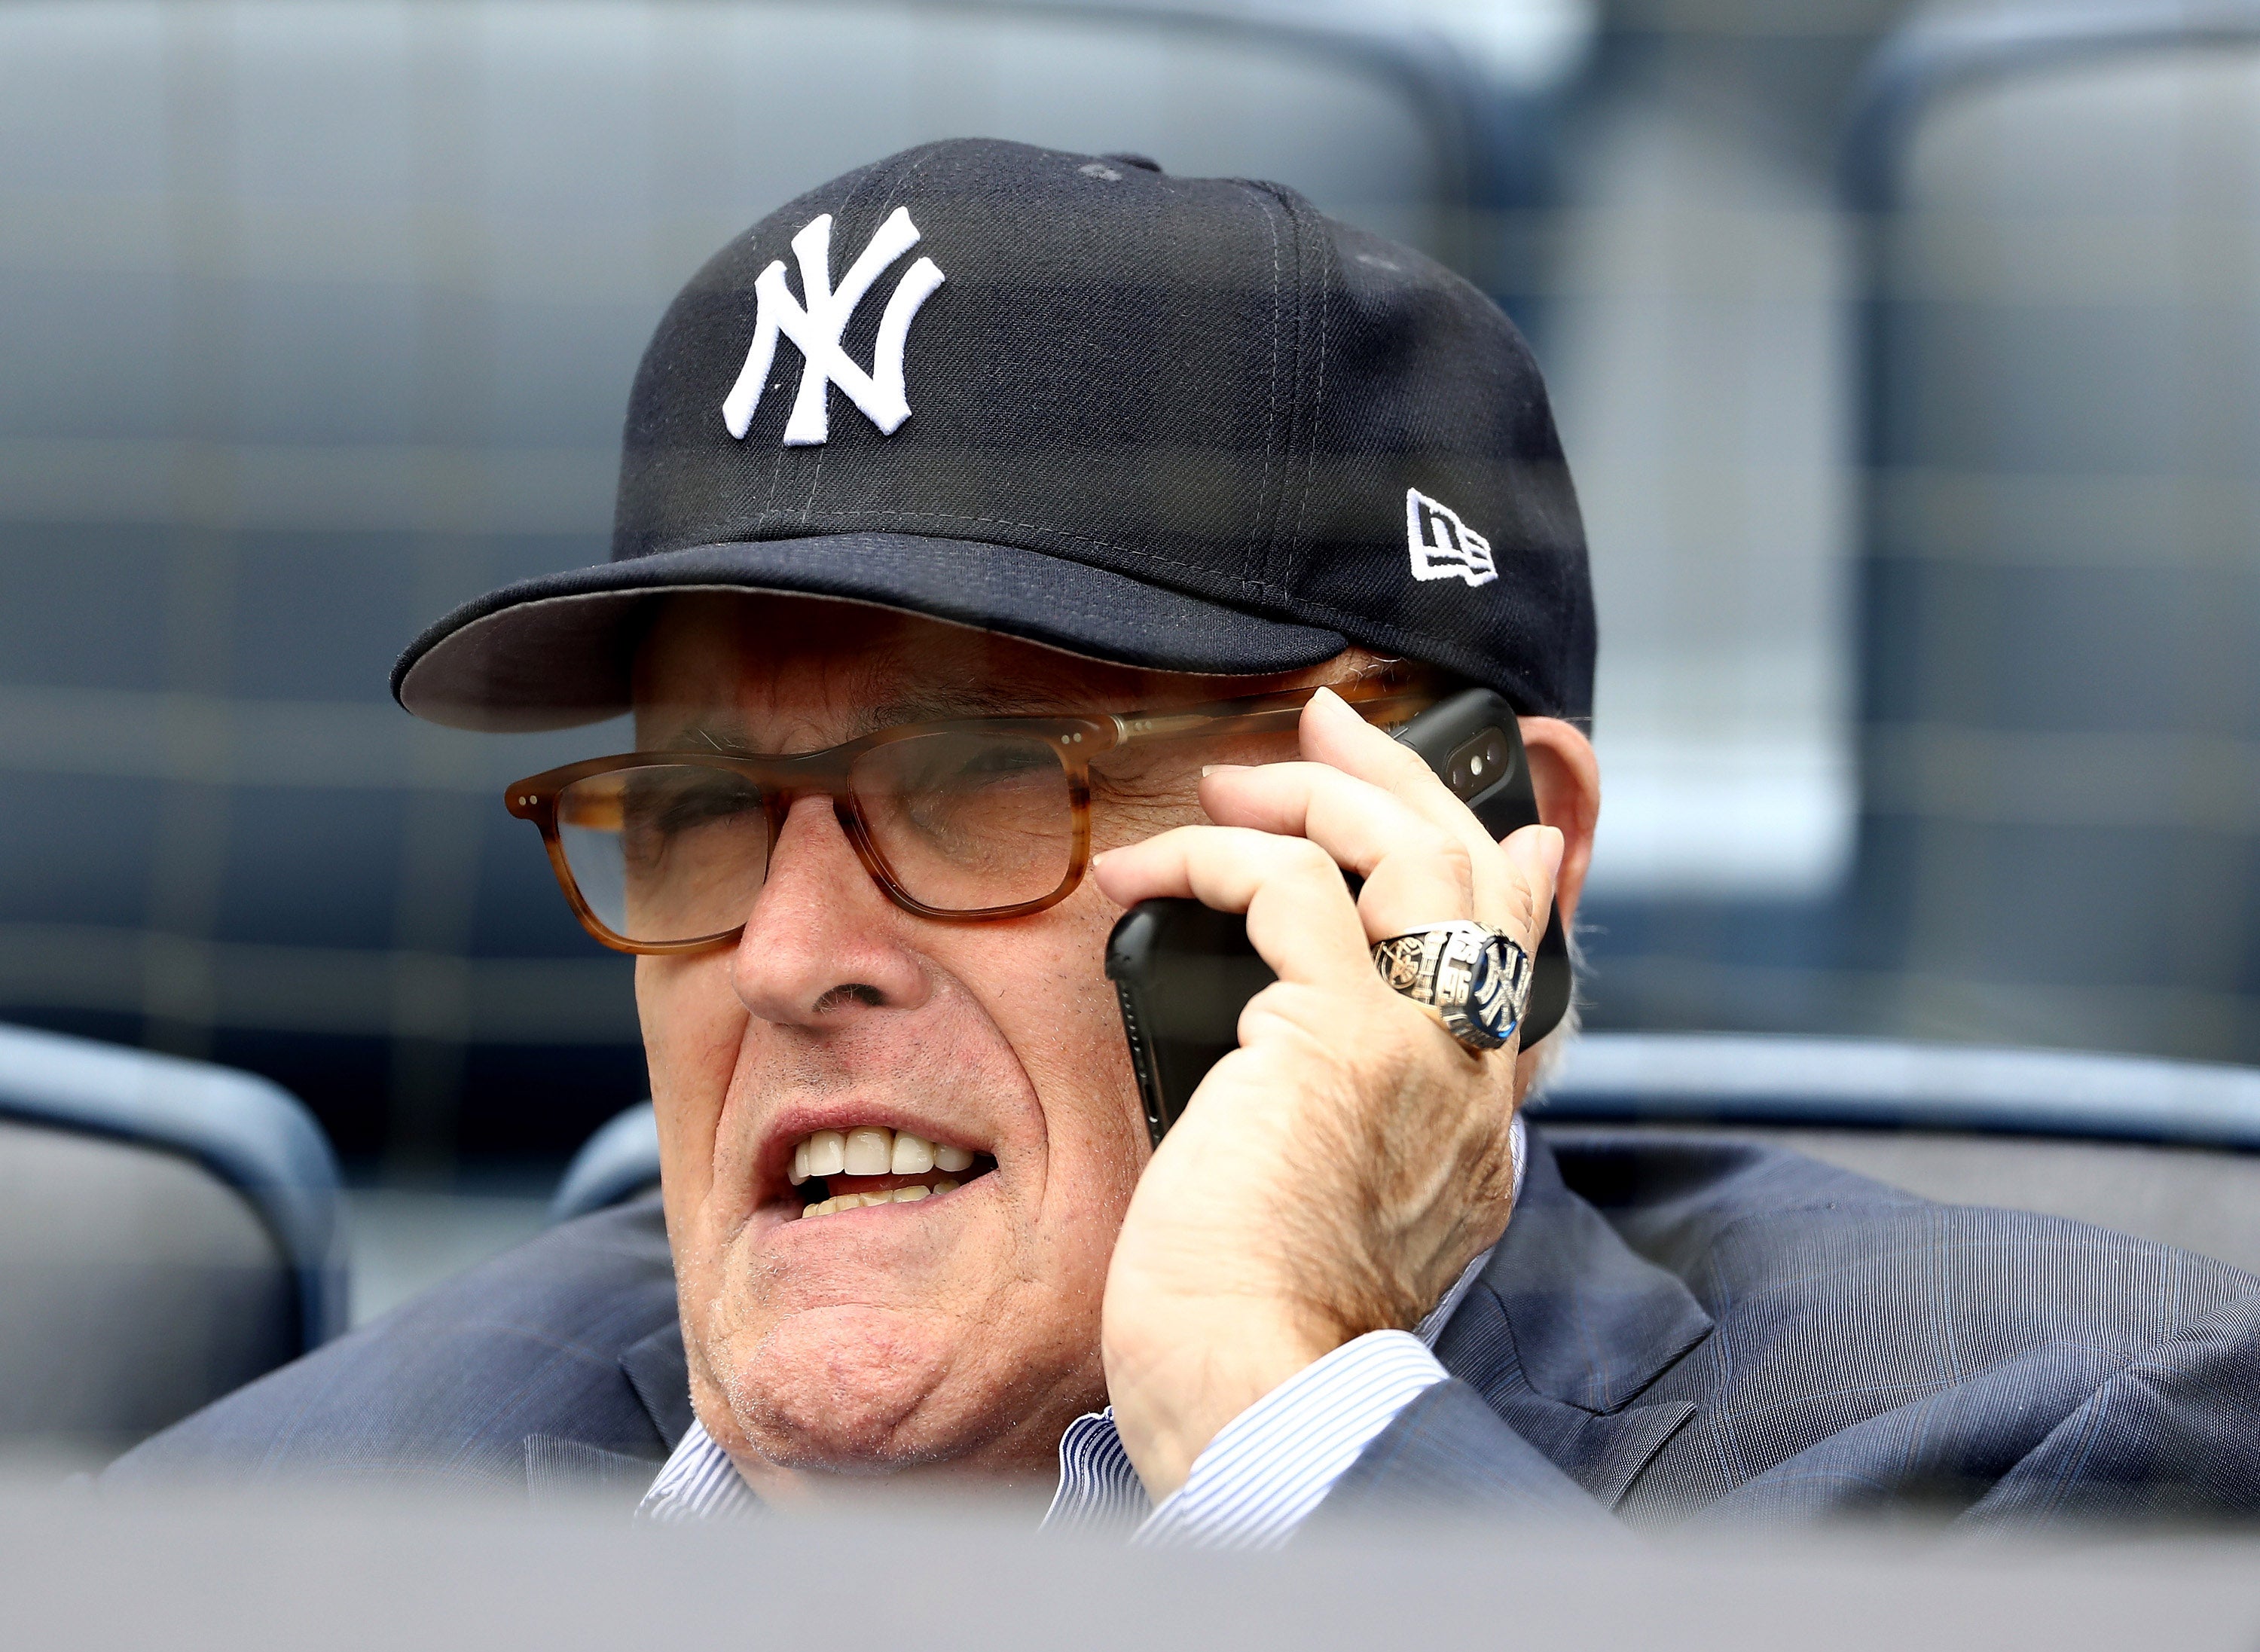 Former mayor Rudy Giuliani boasting Yankees gear at a baseball game in May 2018